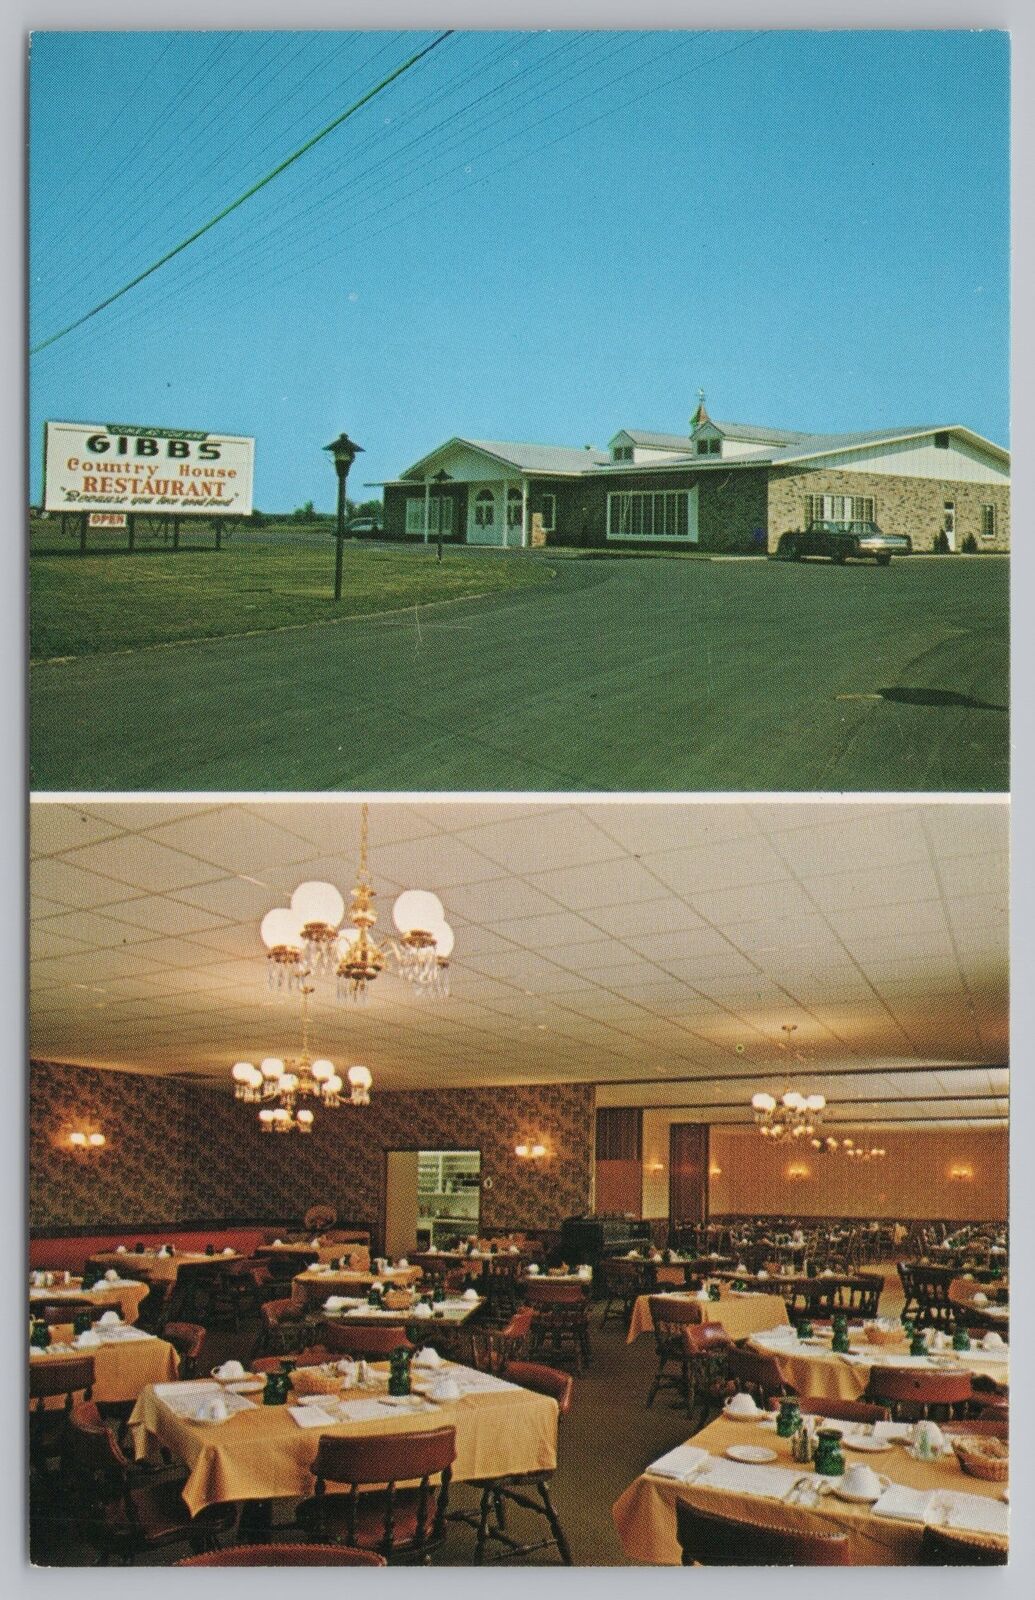 Roadside~Gibbs Country House Restaurant Scottville Michigan~Vintage Postcard